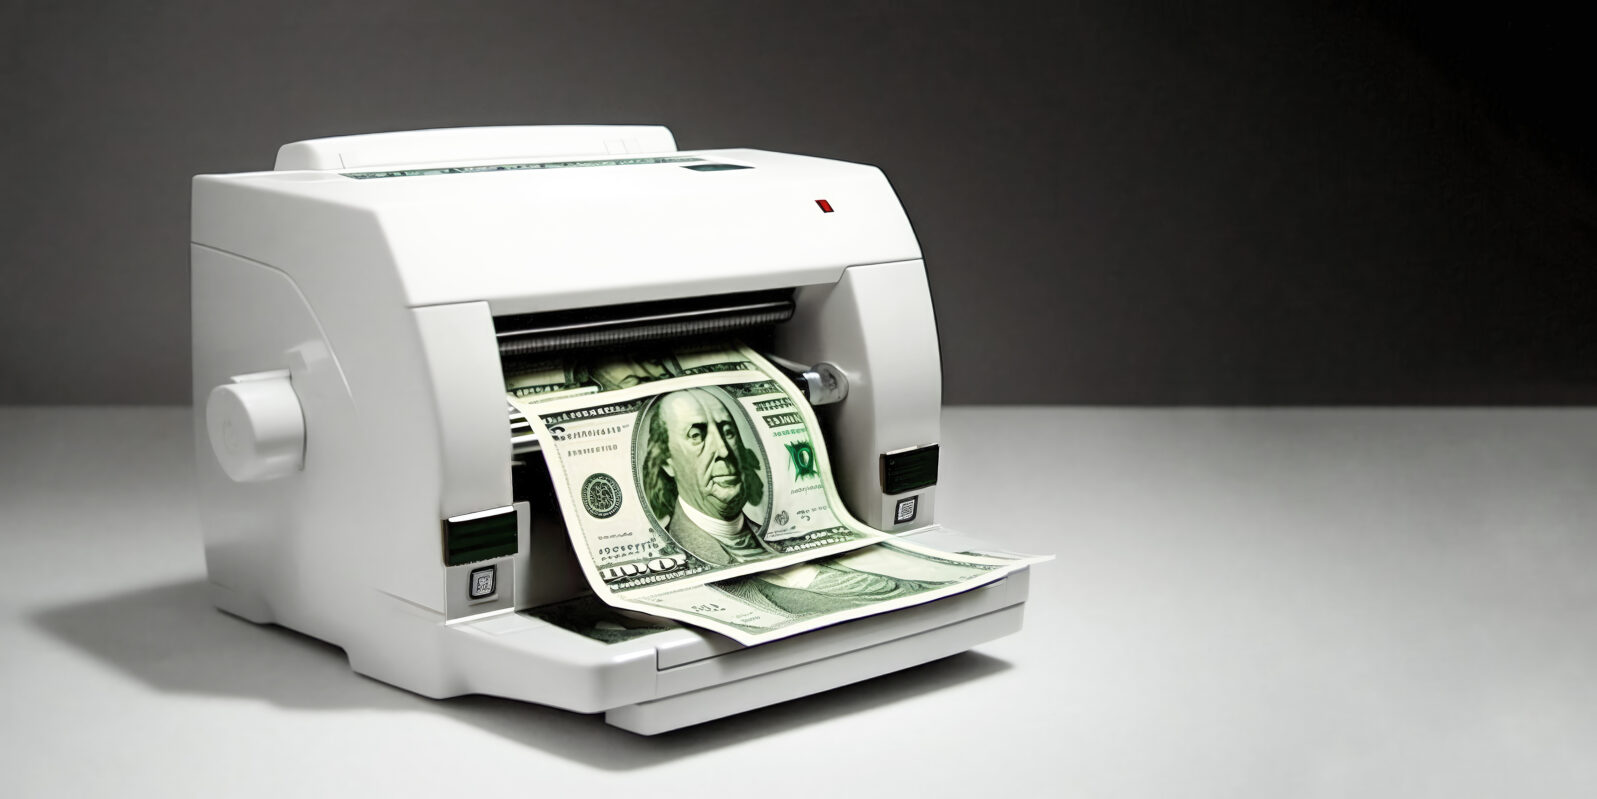 Money making machine printing fake counterfeit dollar bills. Generative AI.